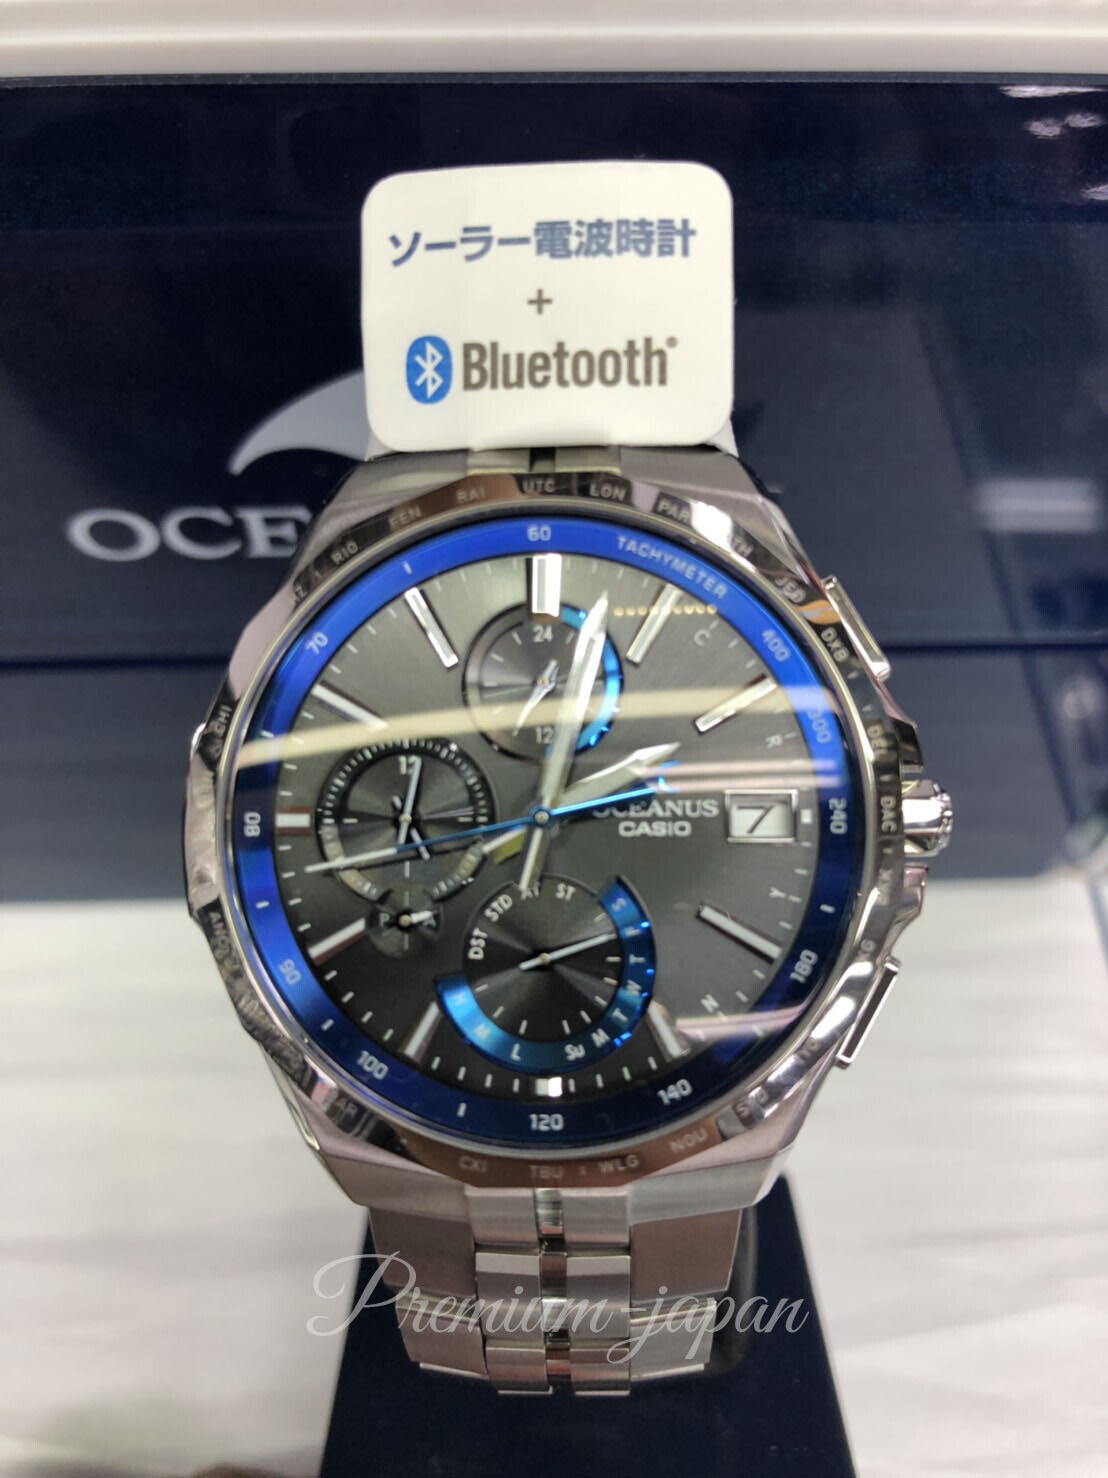 Casio OCW-S5000-1AJF OCEANUS MANTA Bluetooth Watch Japan Domestic 